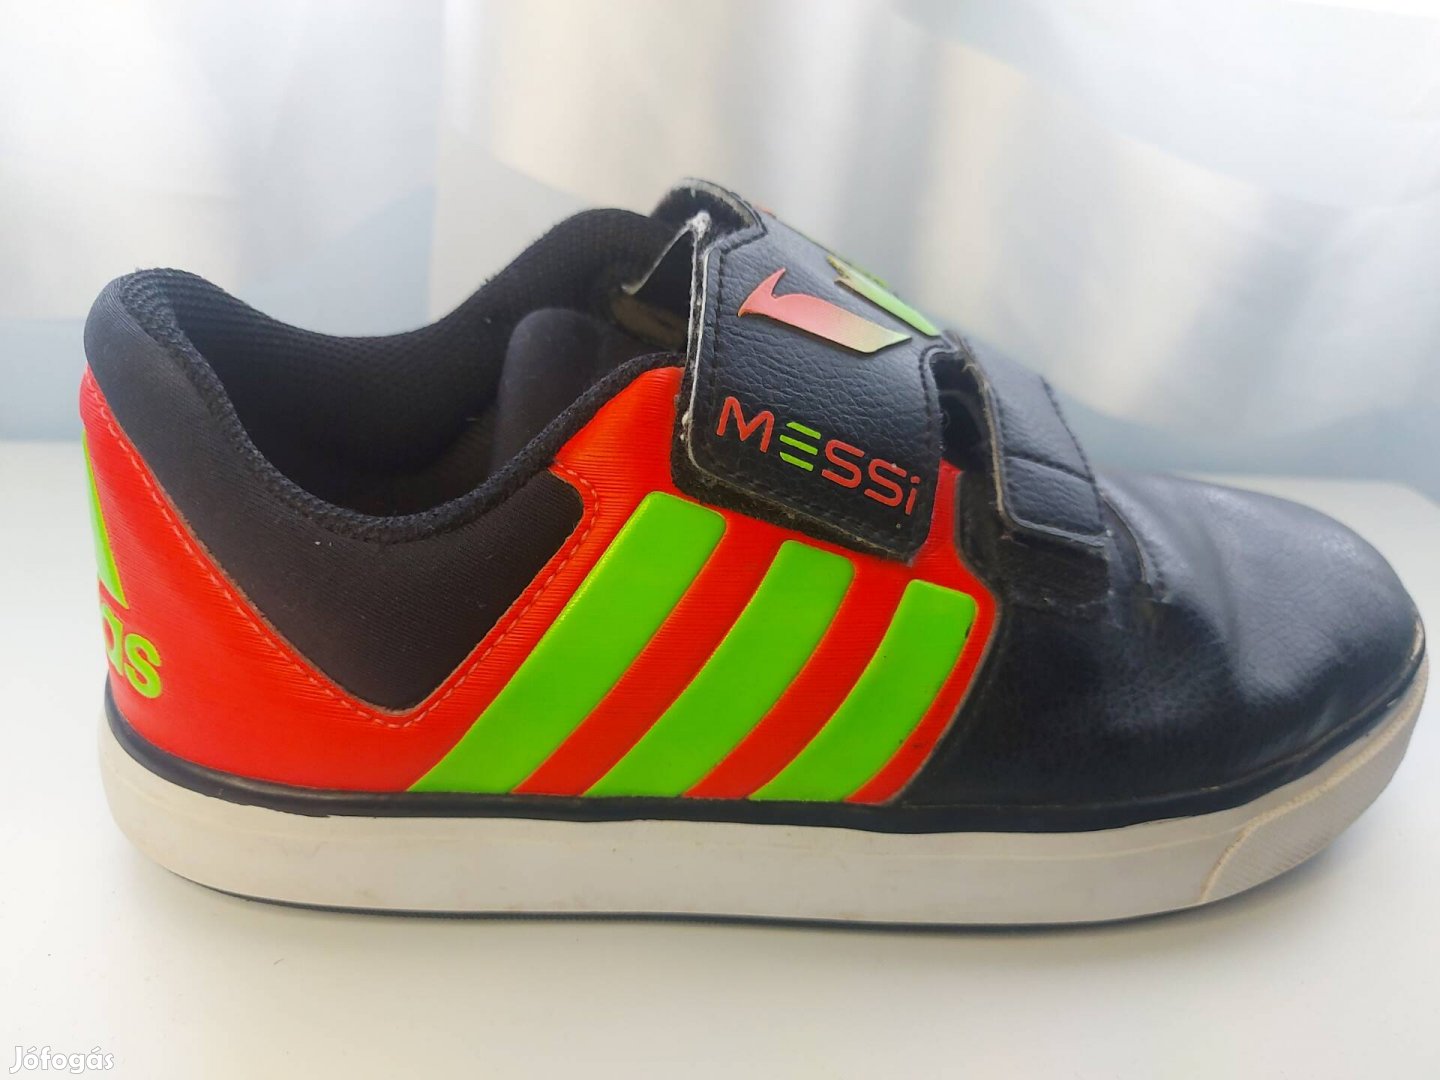 Eladó Adidas Messi cipő!38